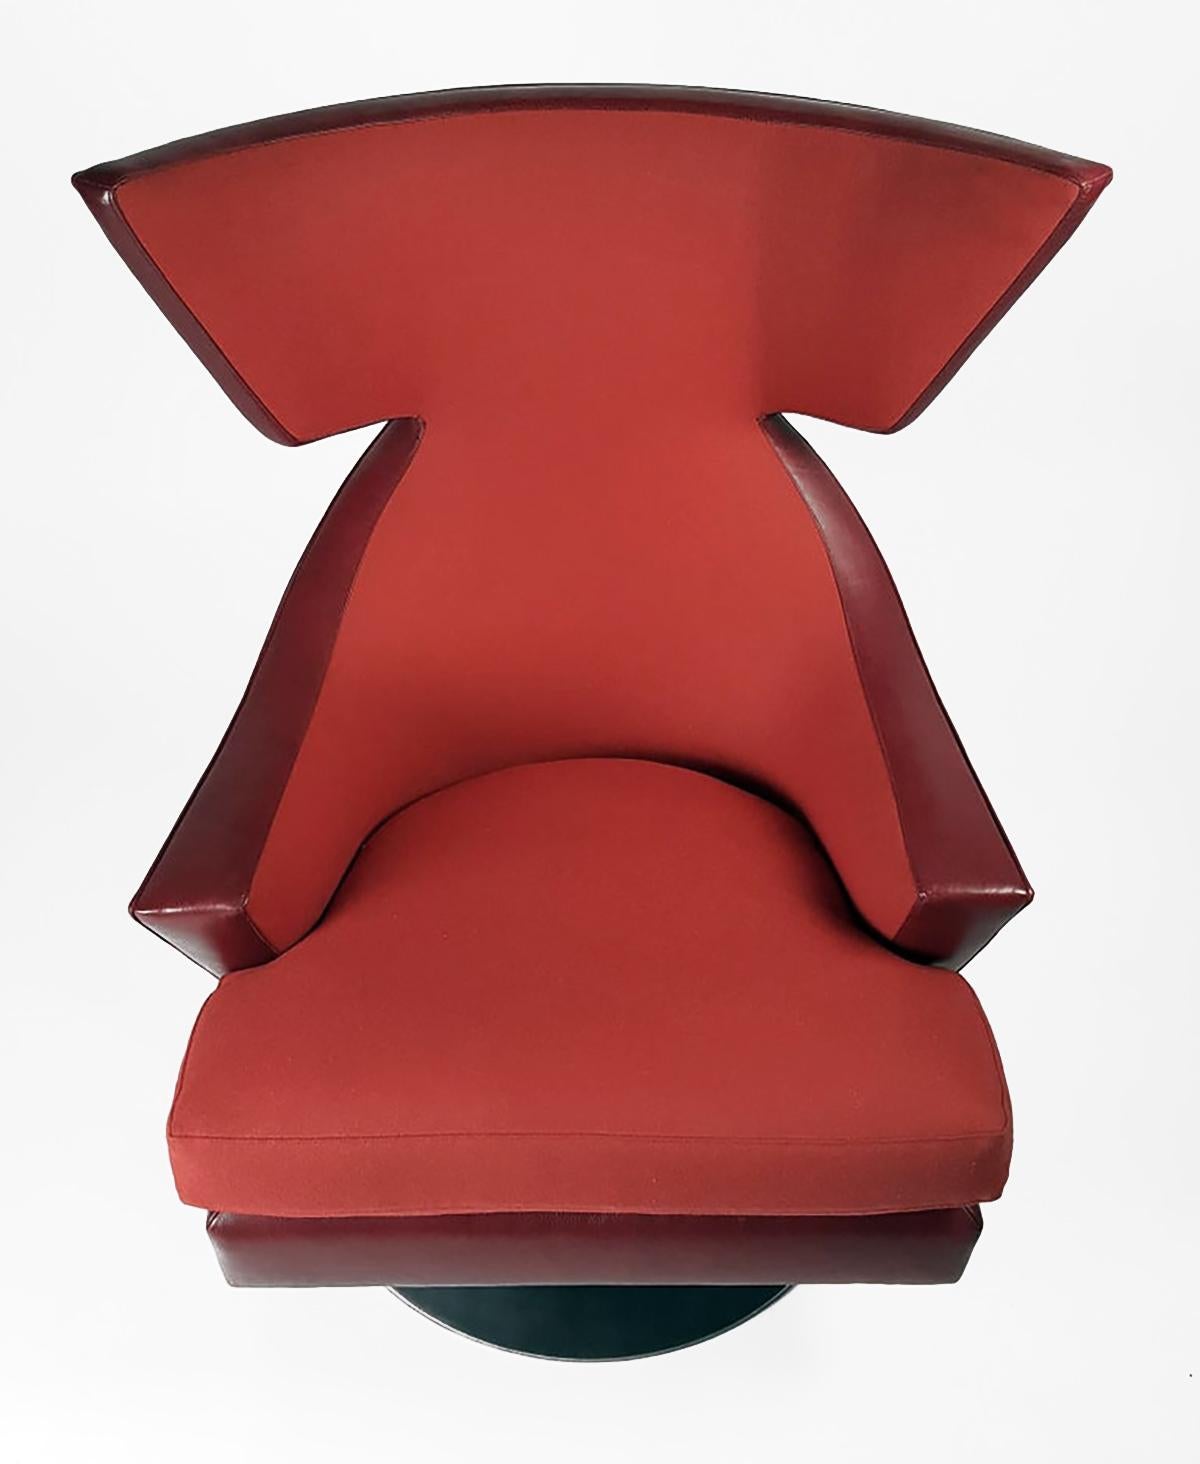 Steel Knoll Leather Wing Back Swivel Lounge Chair Designed by Joe D'urso